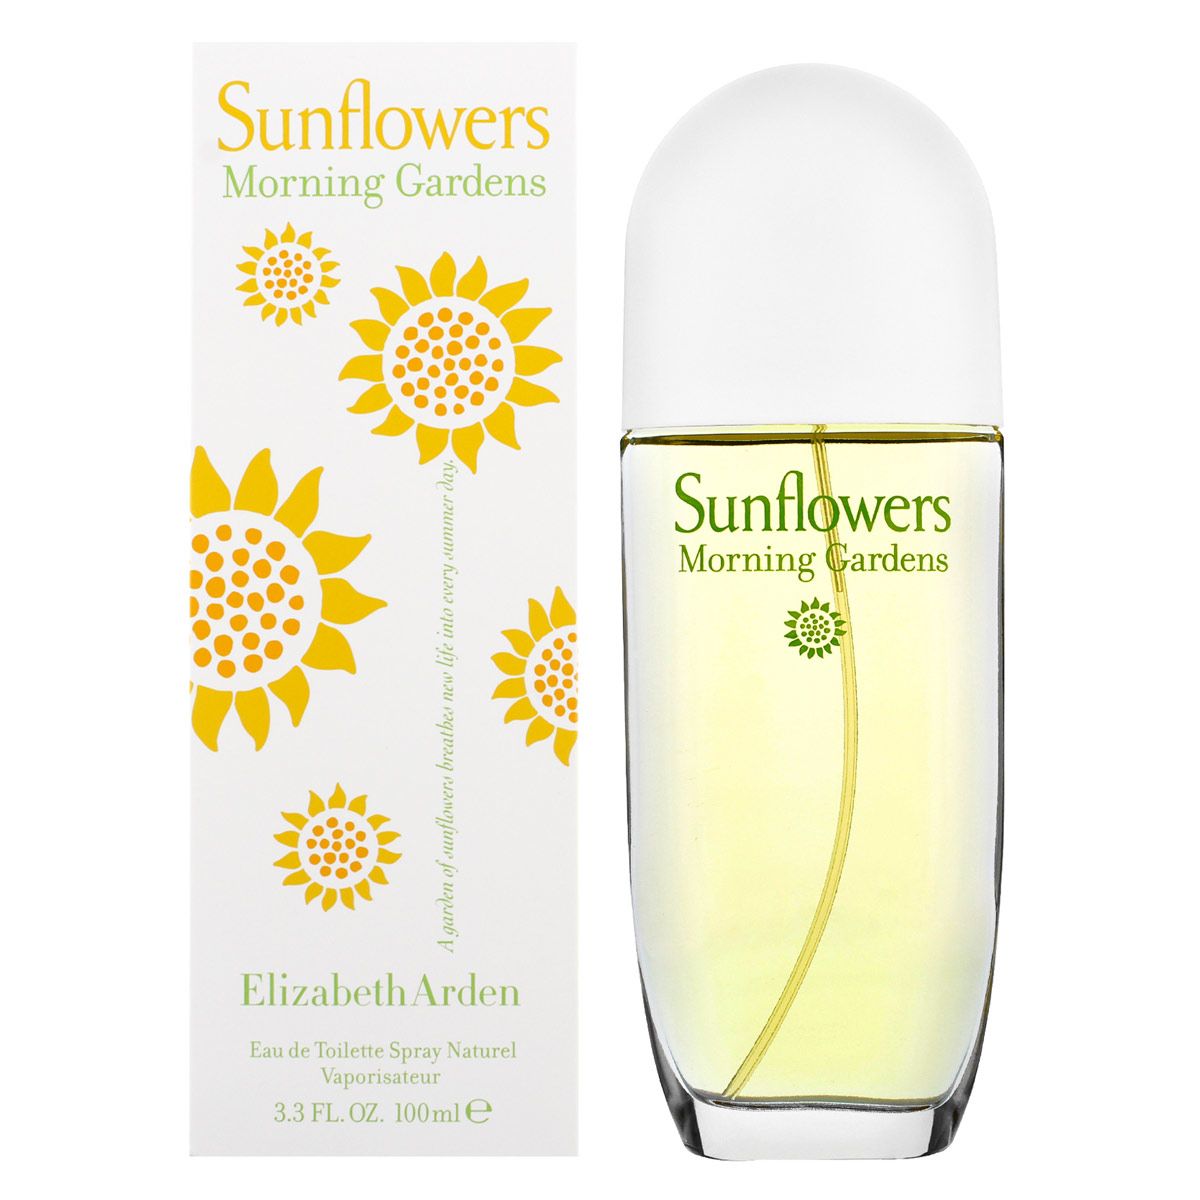  Elizabeth Arden Sunflowers Morning Gardens 